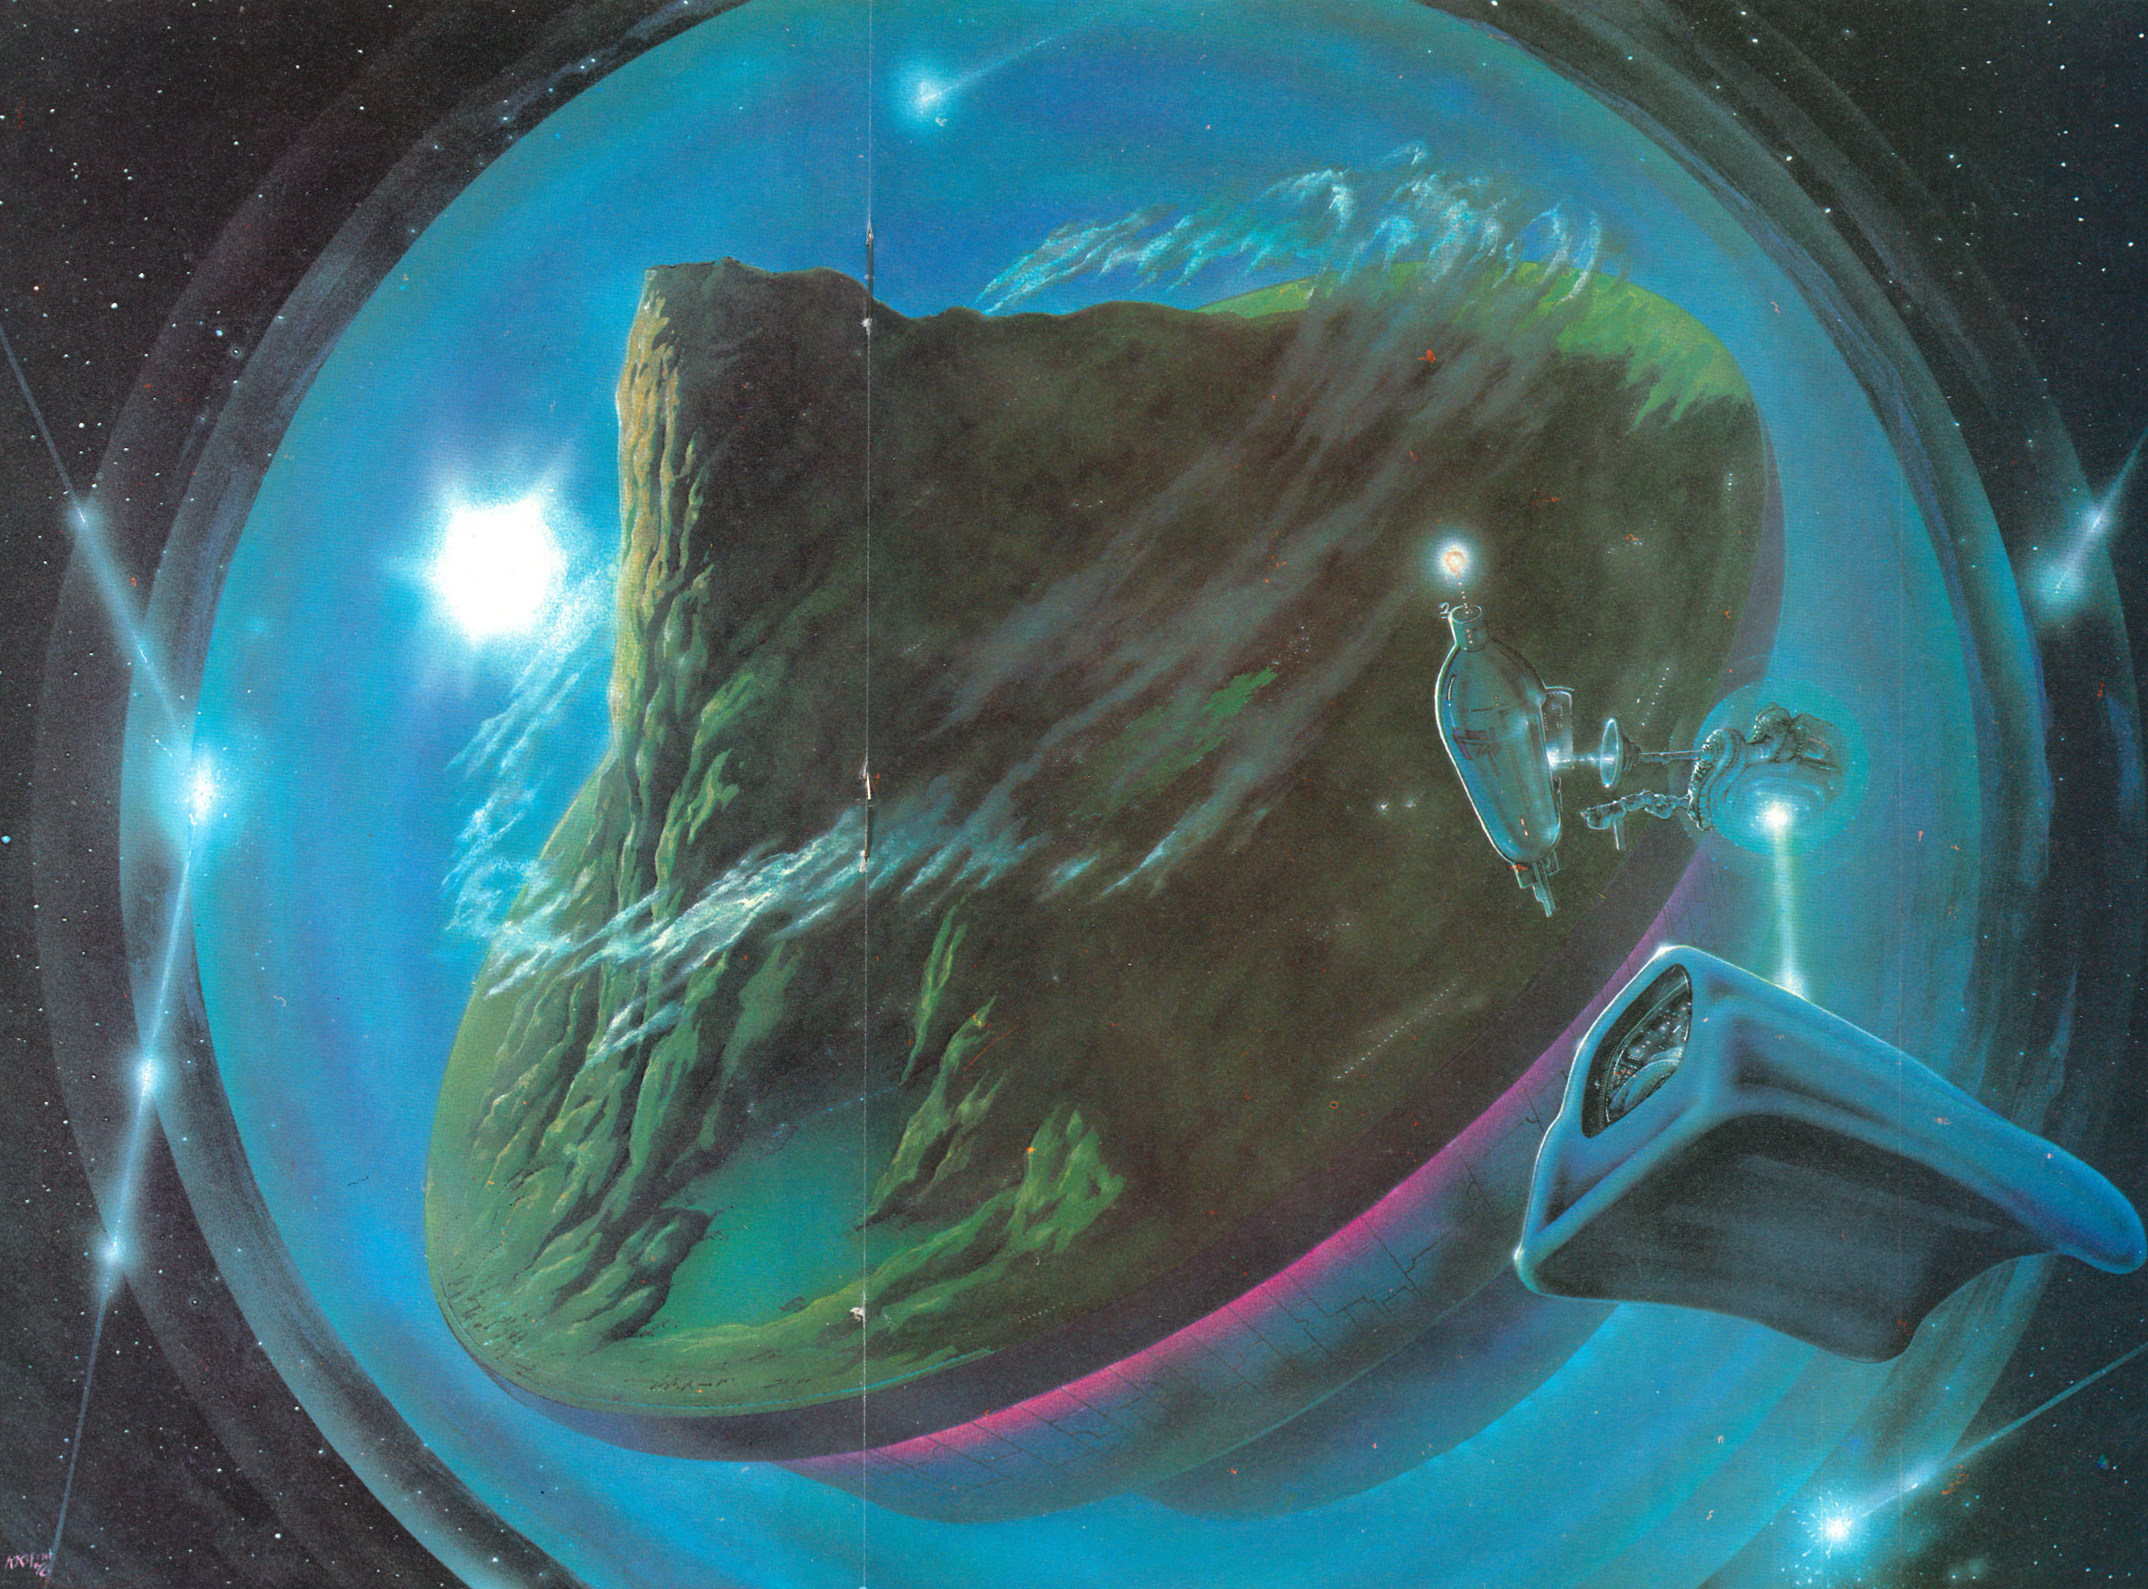 Galactic Geographic: Millenium Starship - Karl B. Kofoed (Heavy Metal. 1978. May – Volume 2 No. 1)